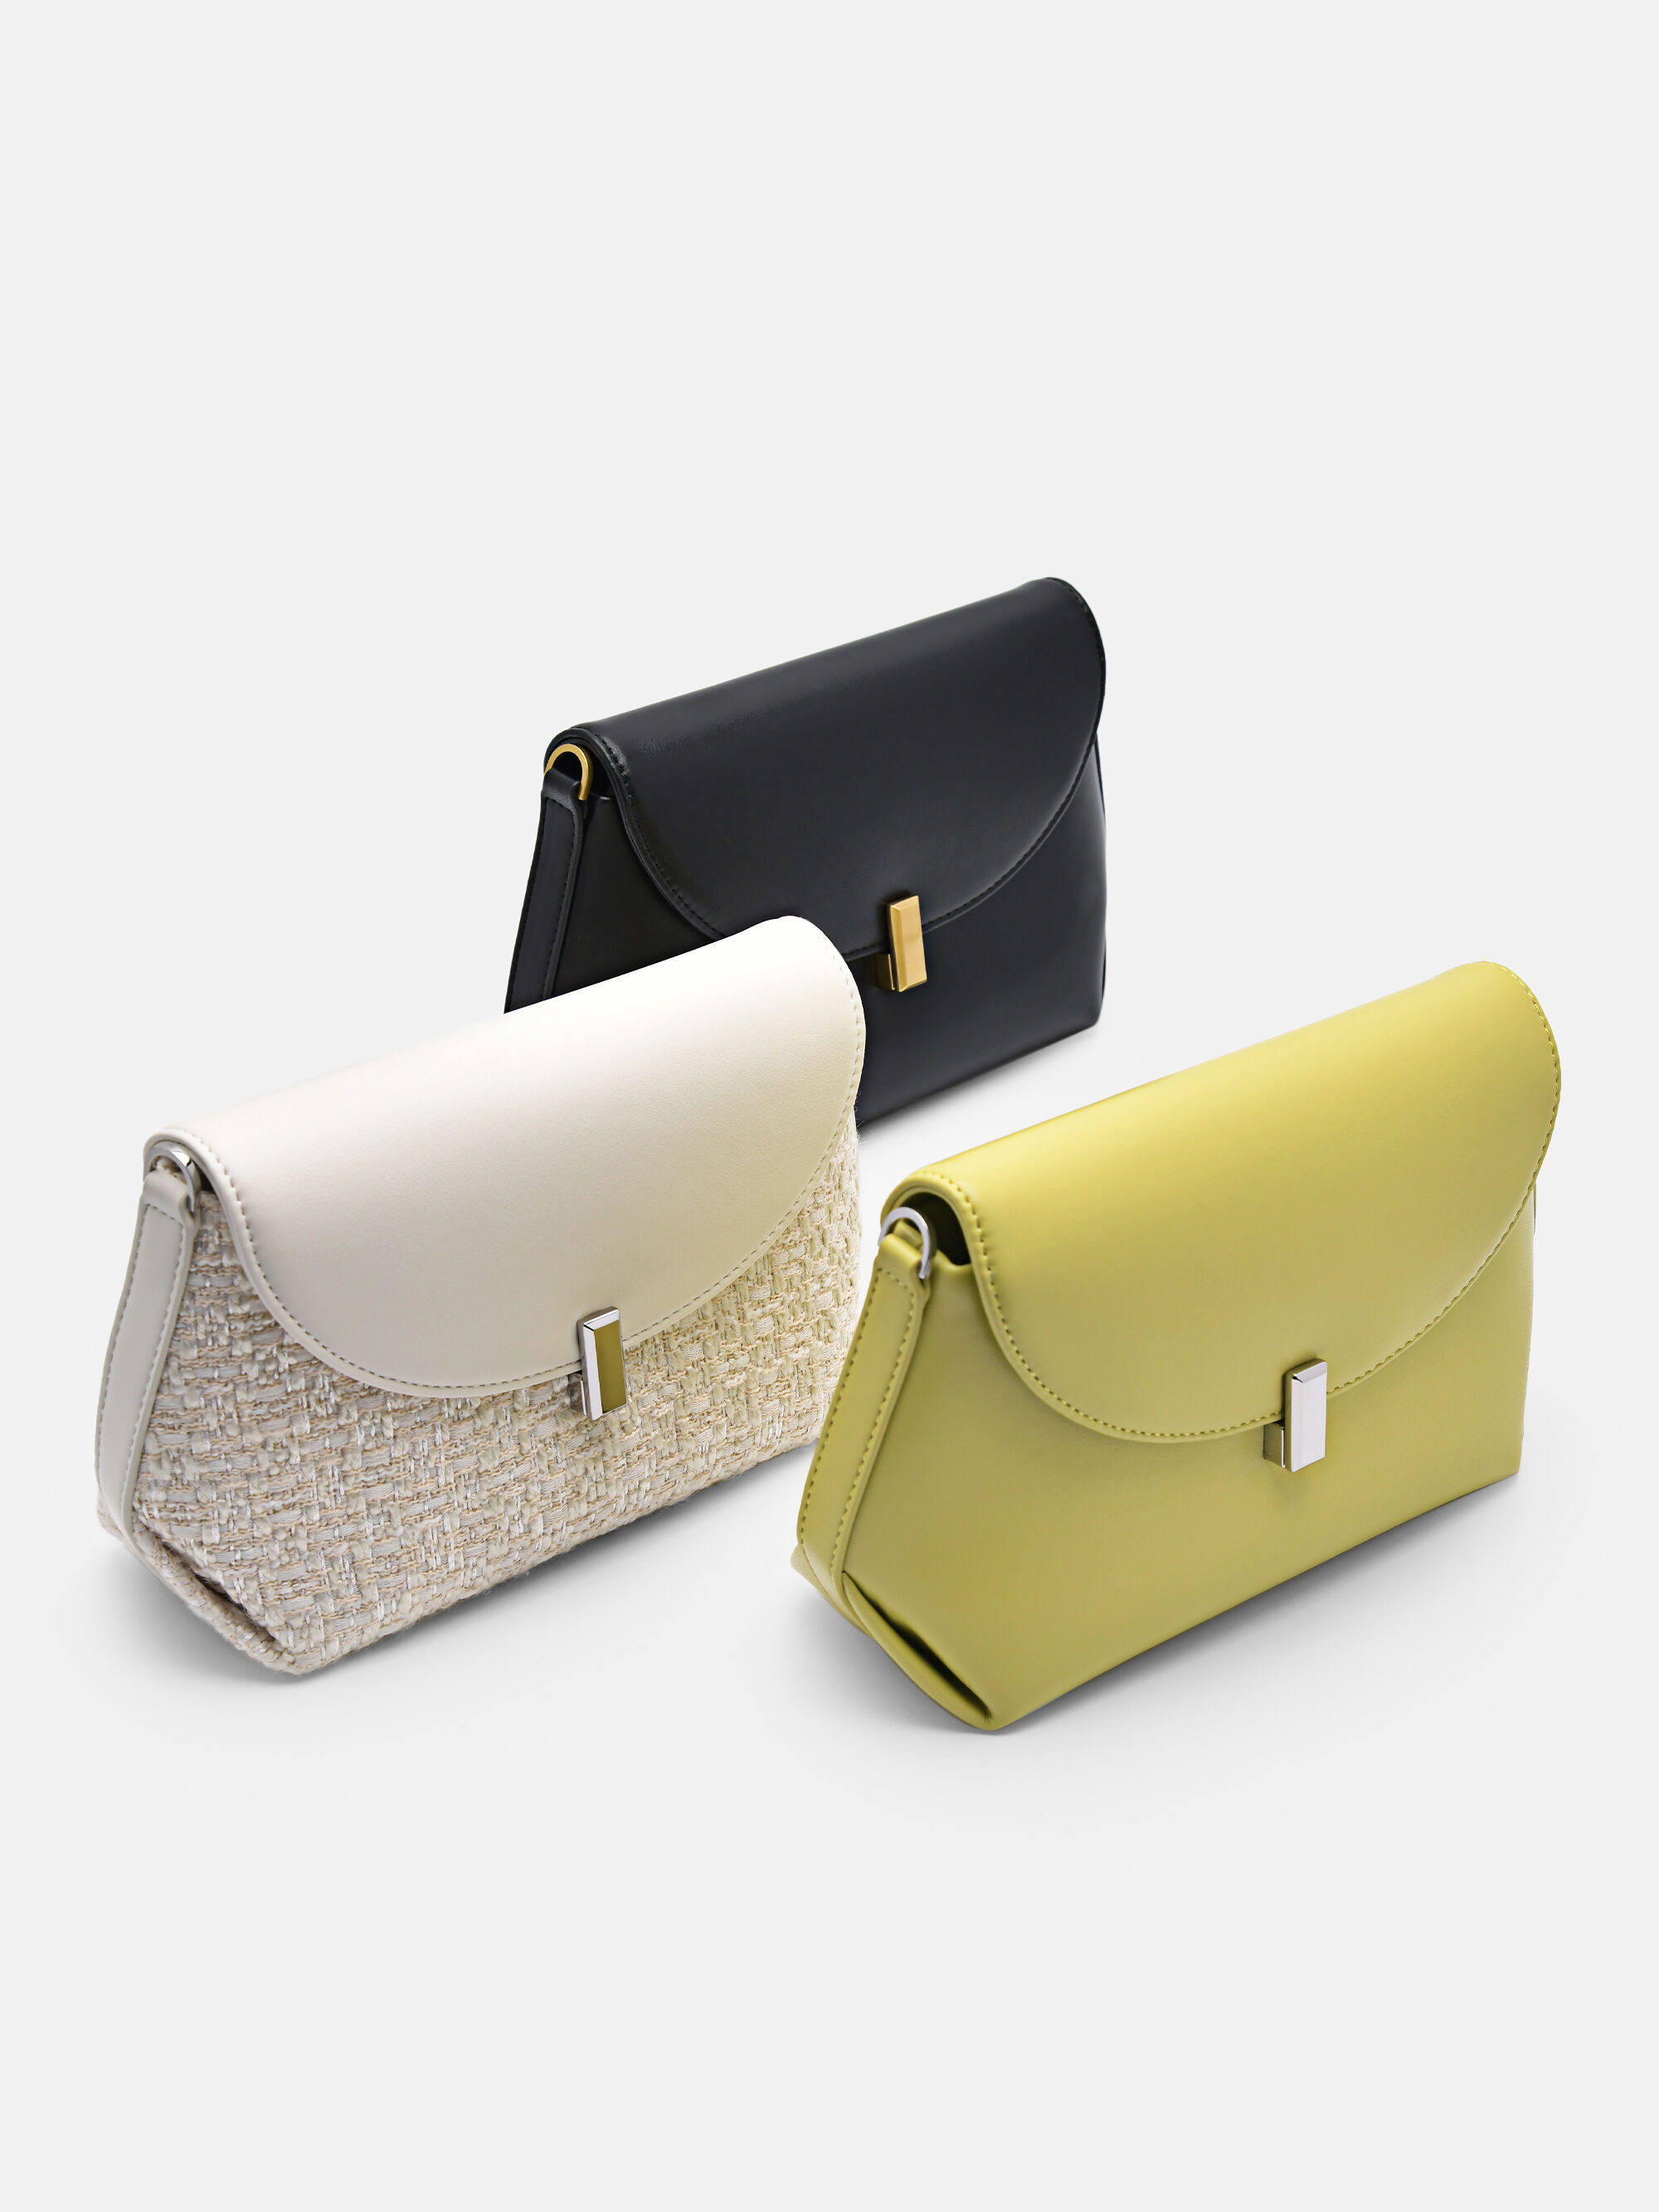 PEDRO Naomie Mini Shoulder Bag Price: MVR 1740 Details - Material